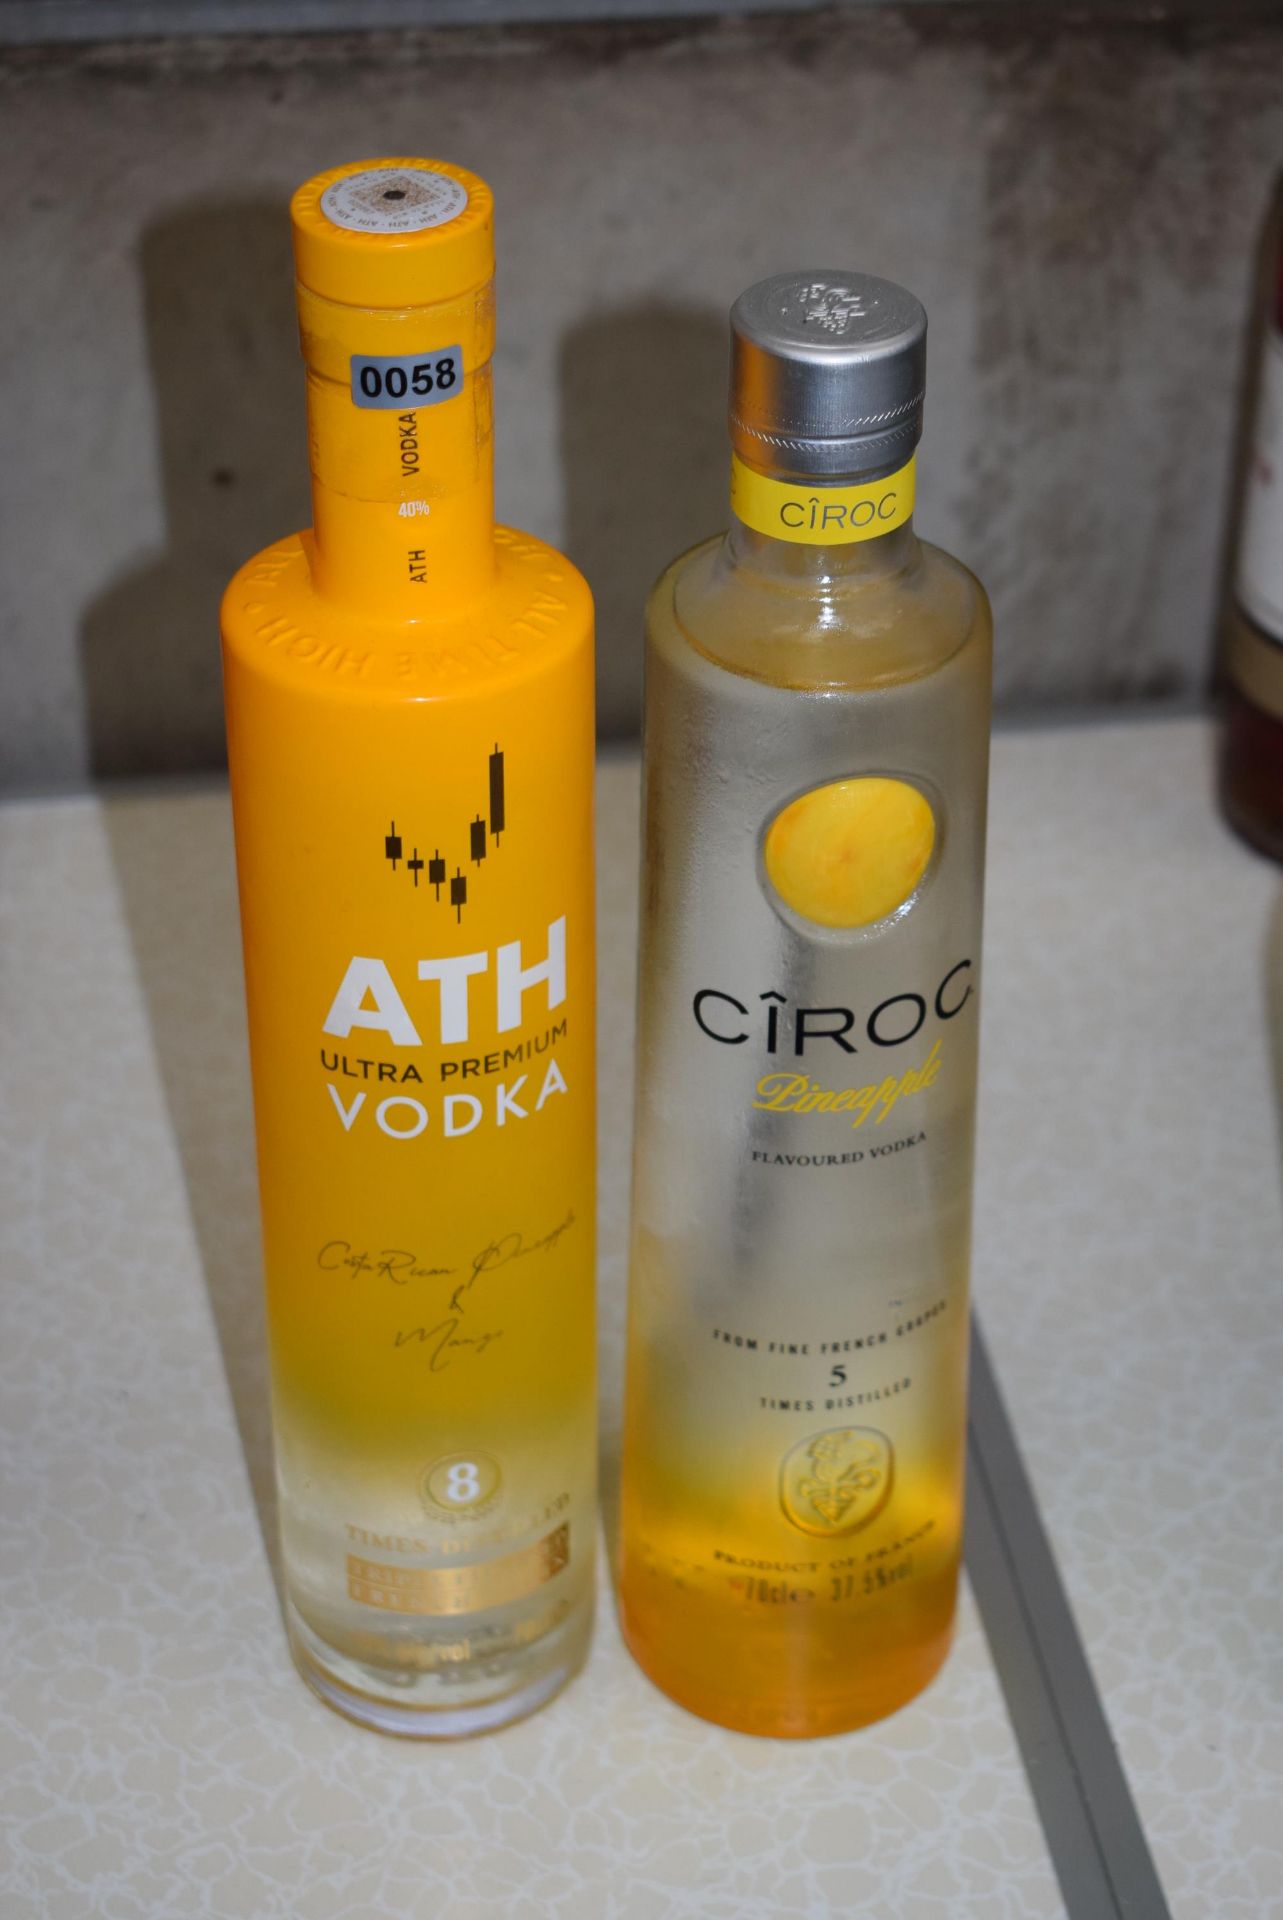 2 X Vodka 1x ATH Pineapple Mango 1 x Ciroc Pineapple